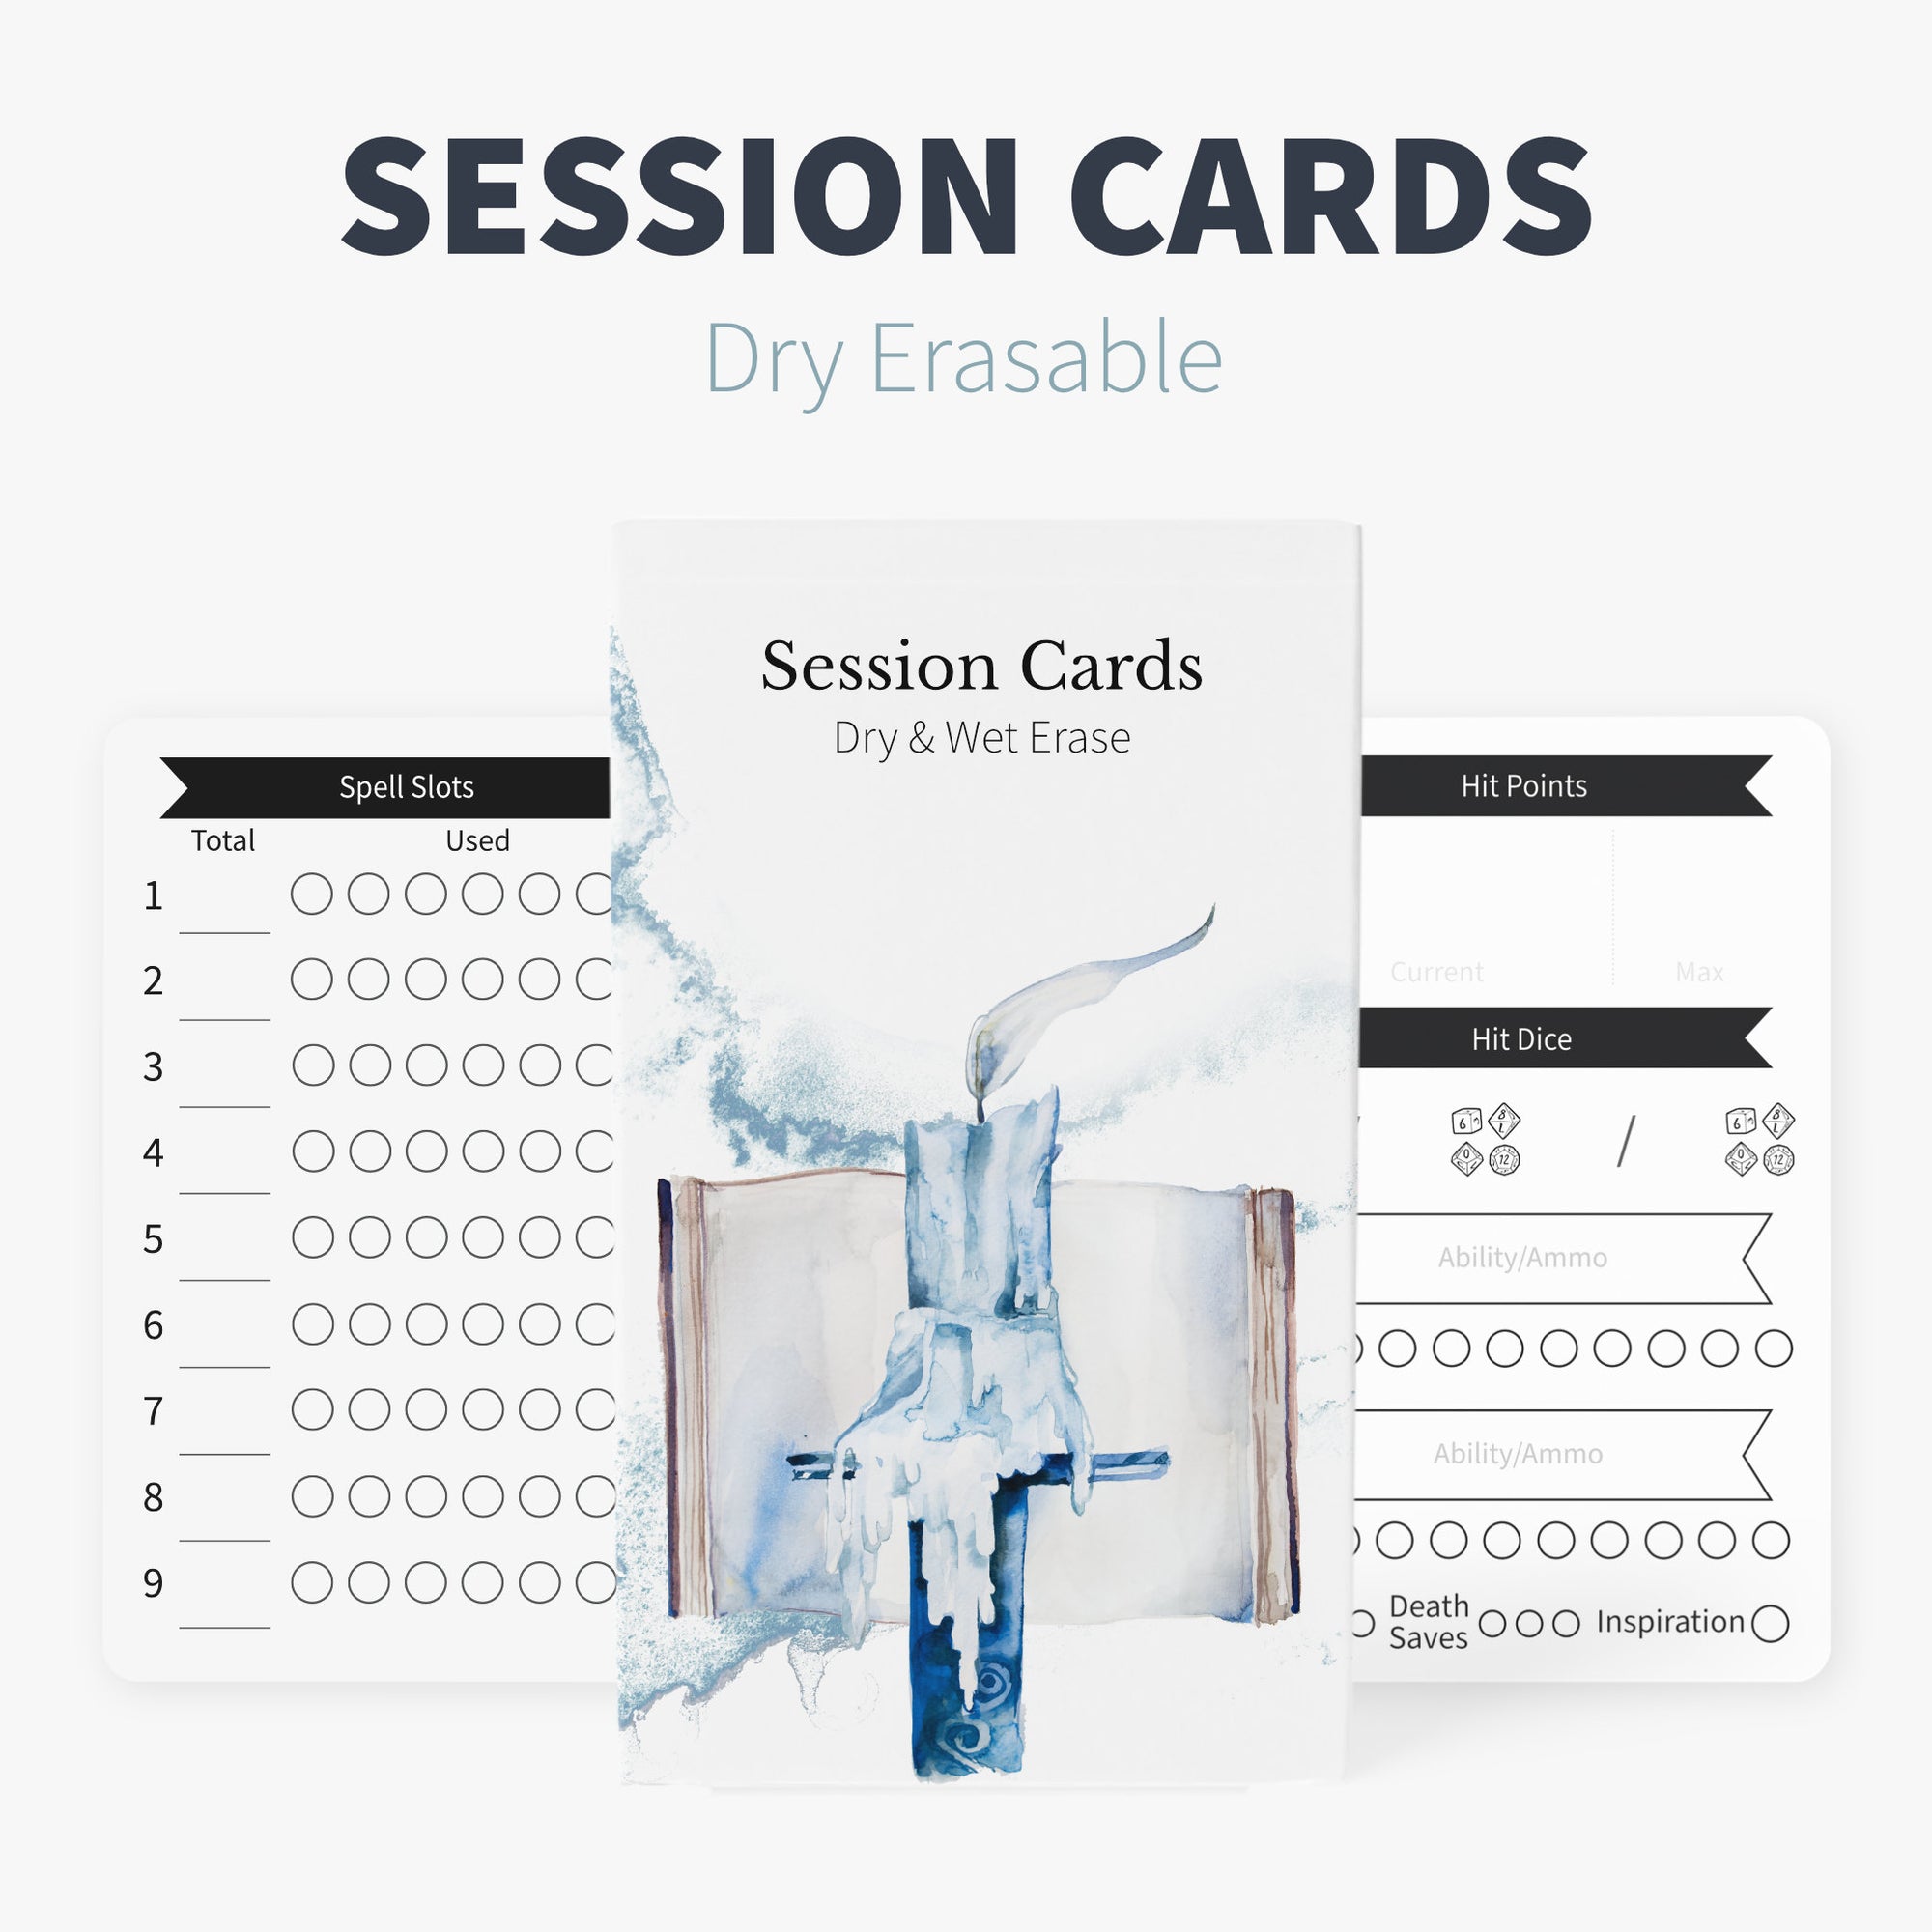 Spell Slot & Session Dry Erase Cards